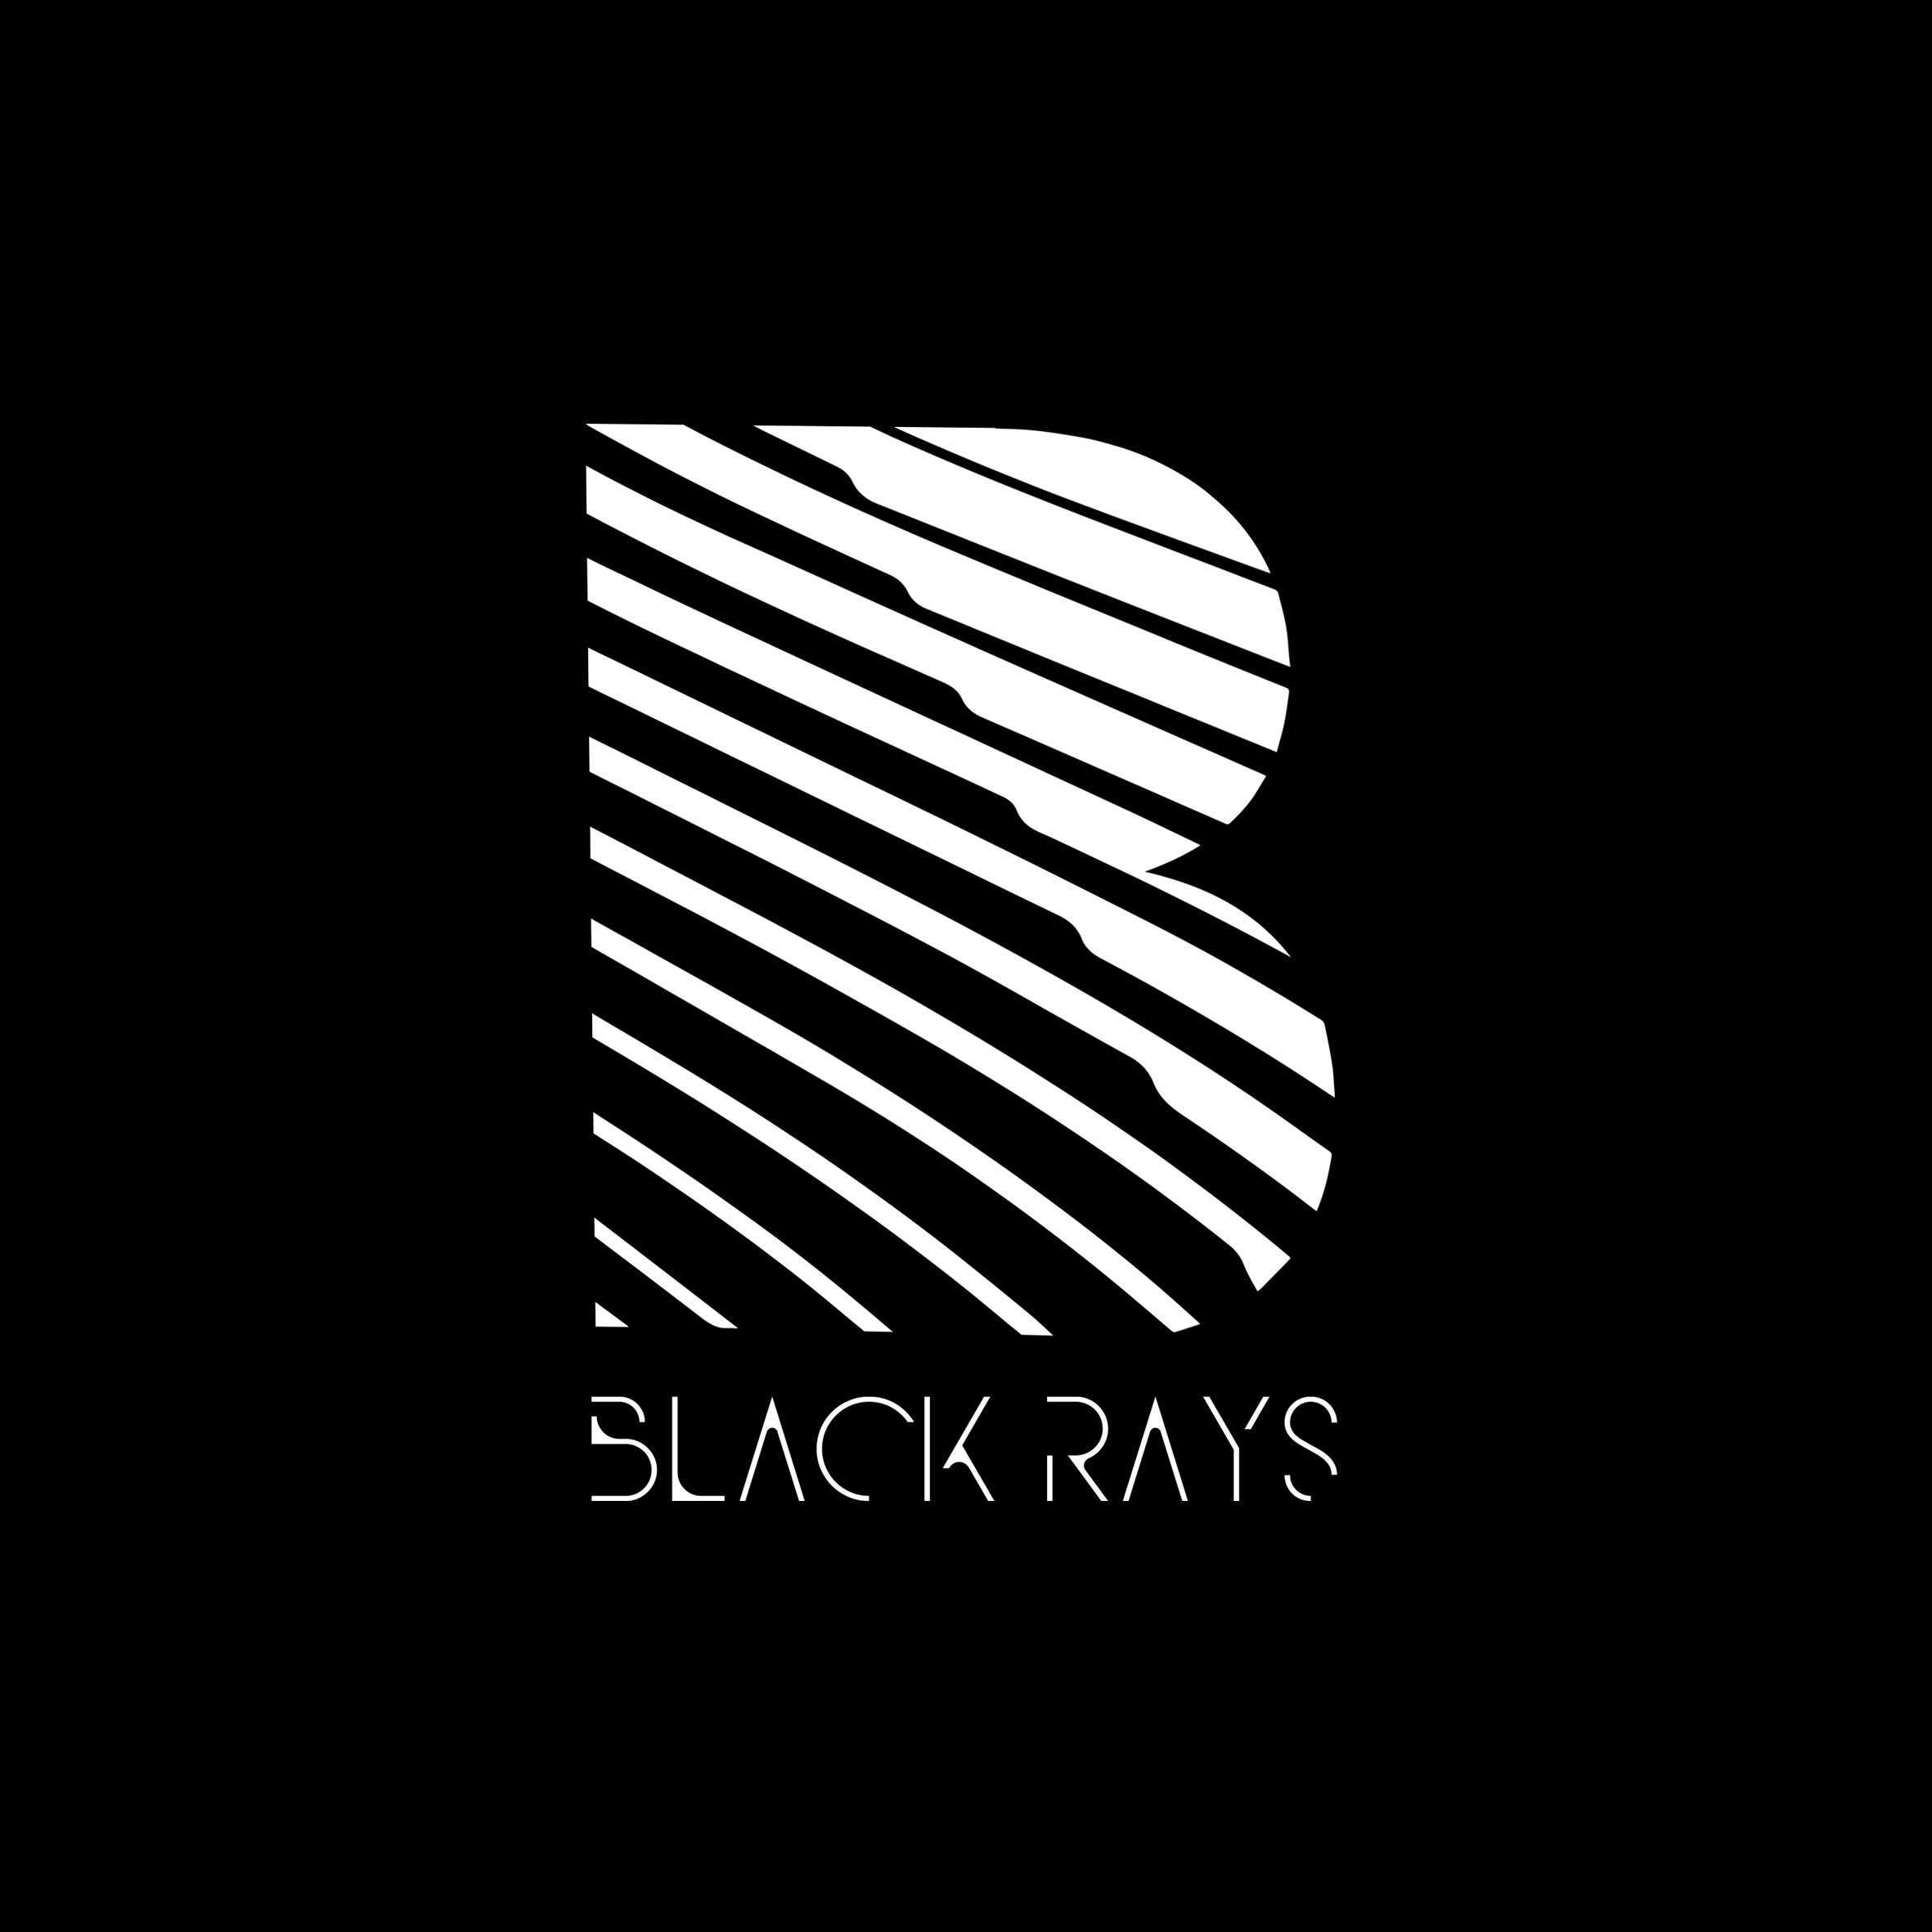 Black Rays